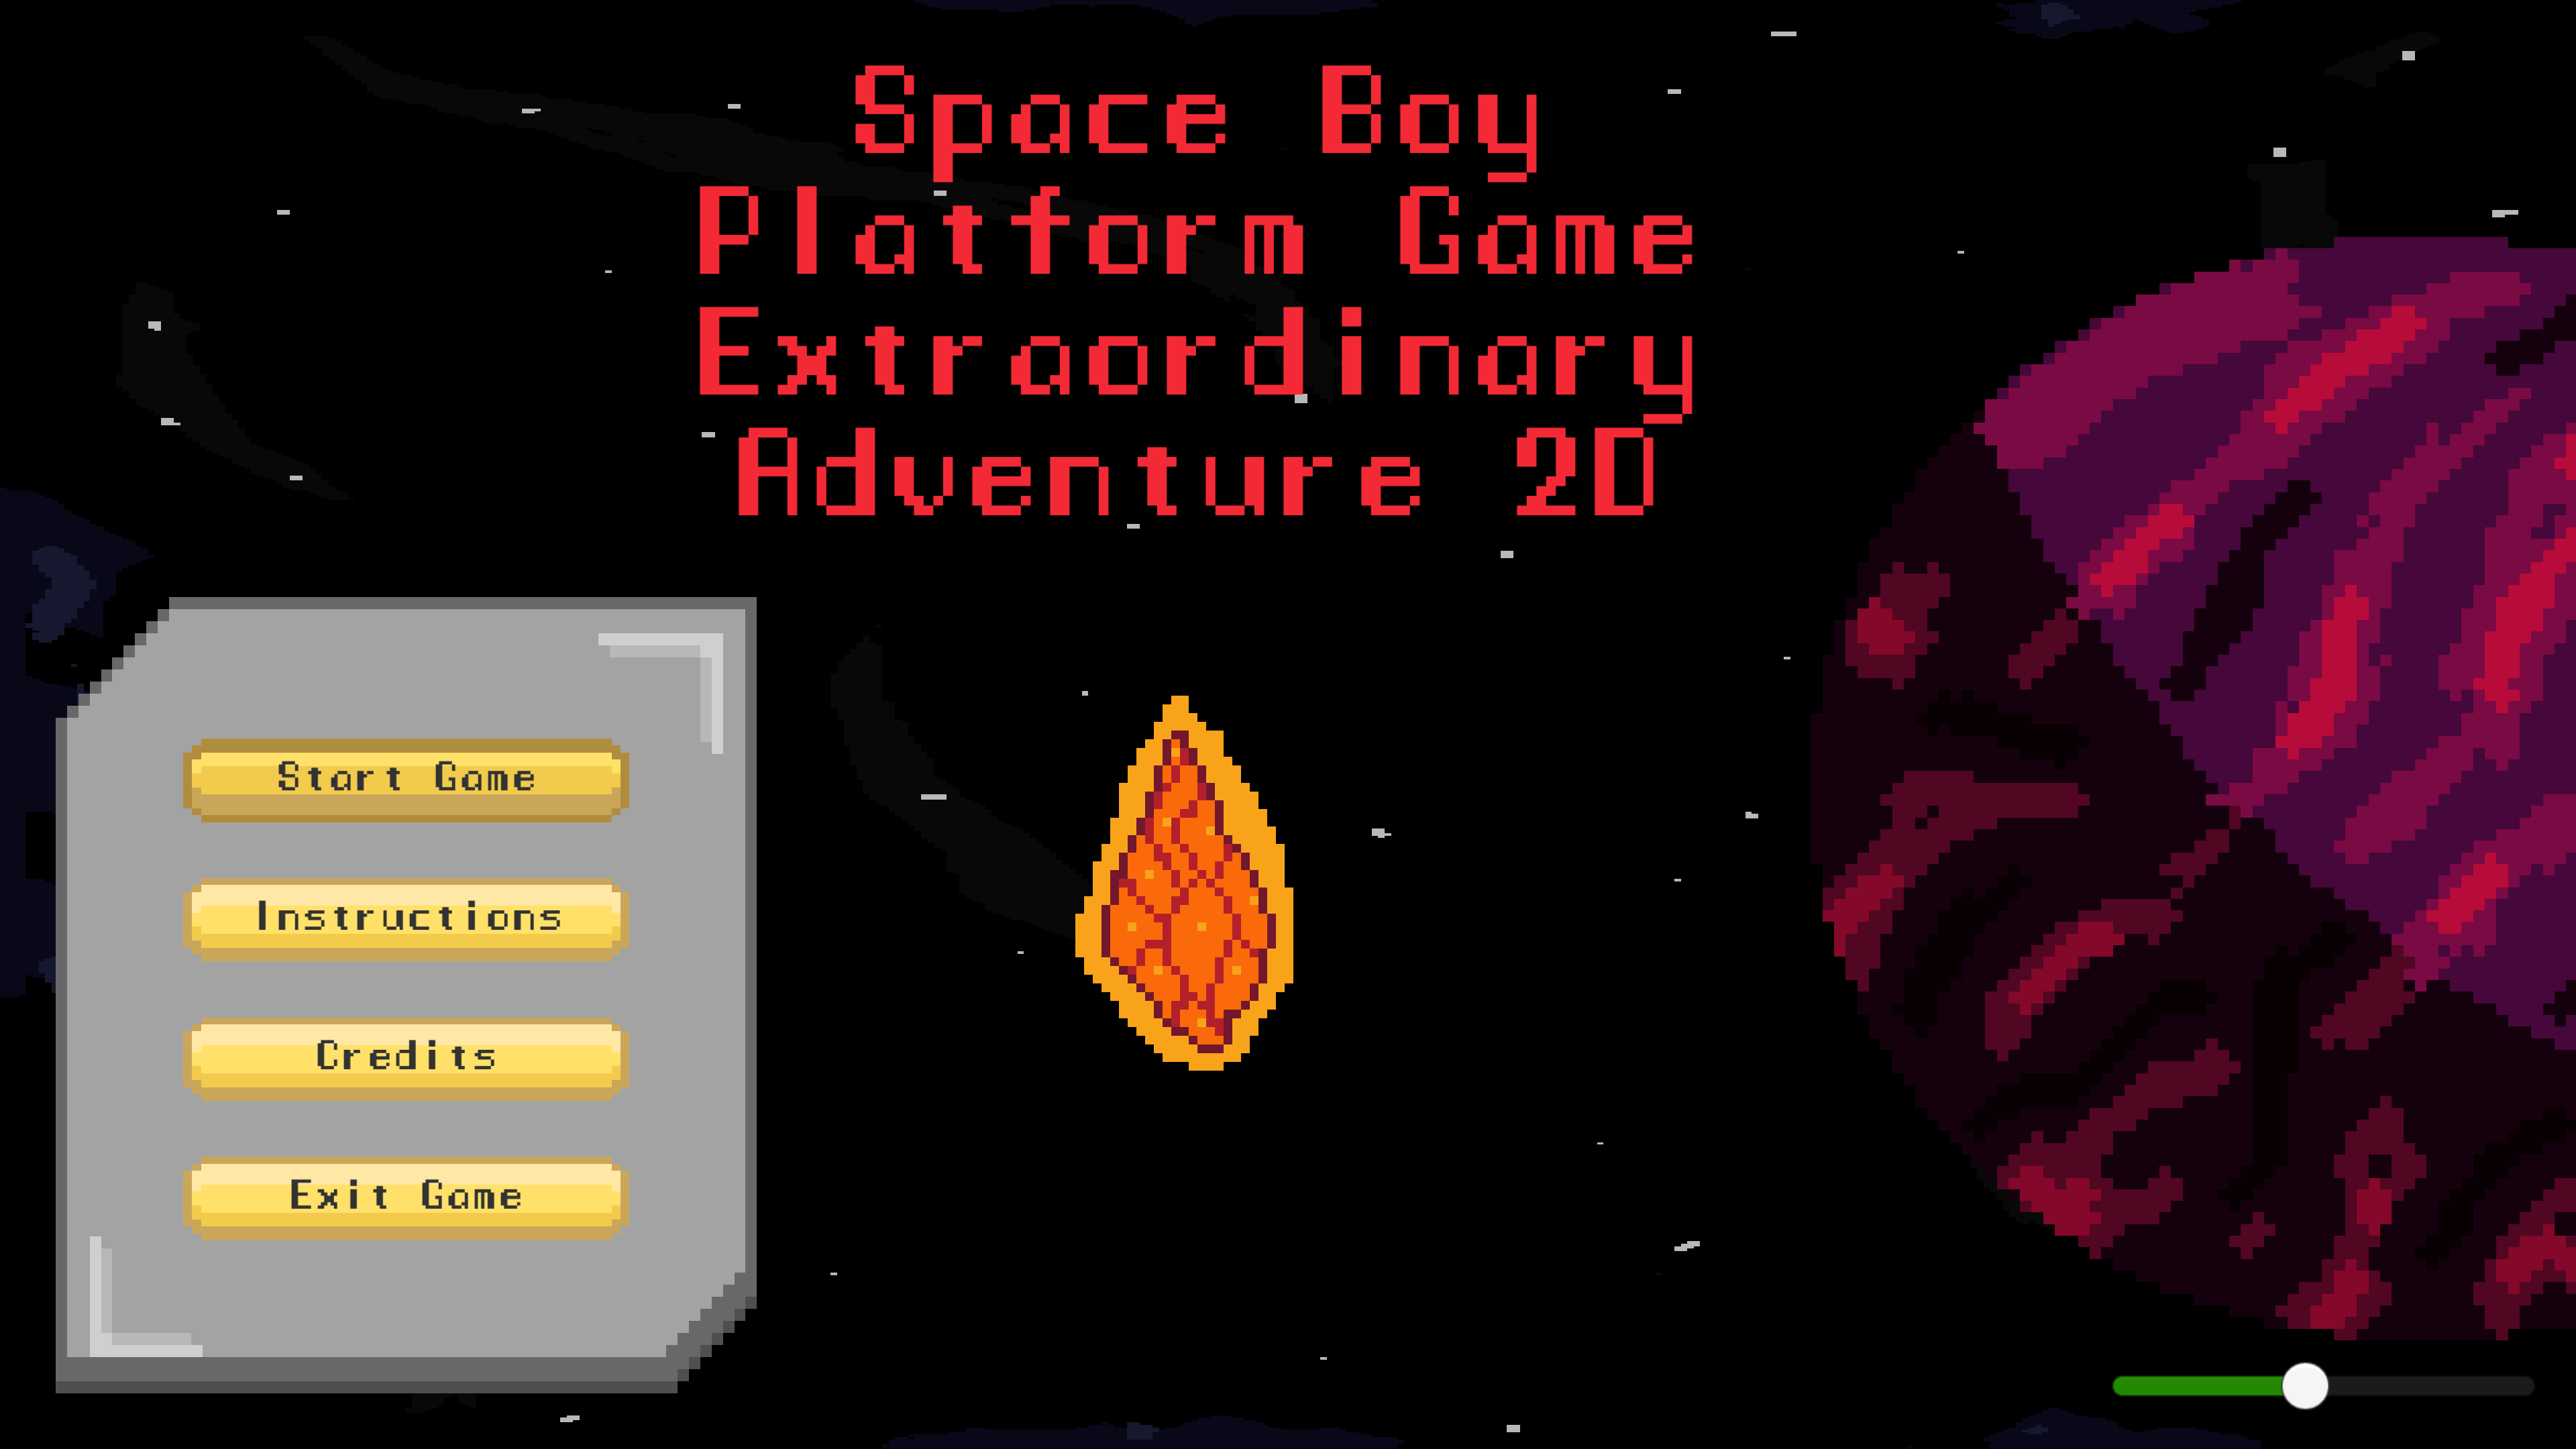 Space Boy Platform Game Extraordinary Adventure 2D